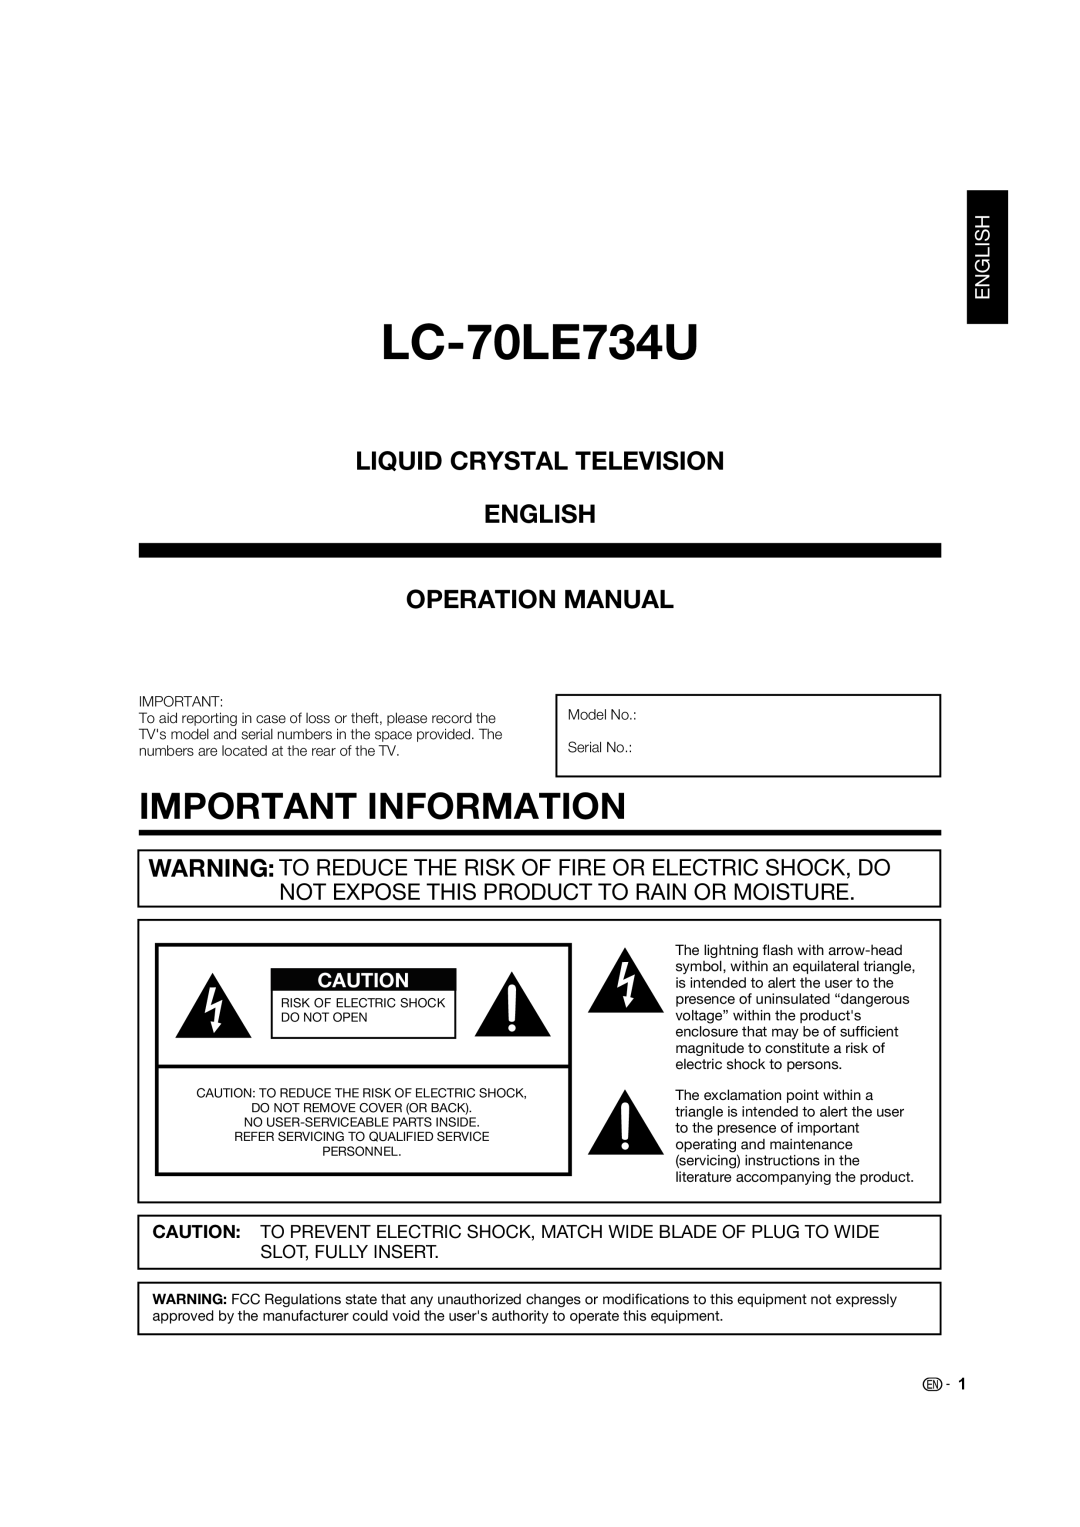 Sharp LC-70LE734U operation manual Important Information, Liquid Crystal Television English Operation Manual 